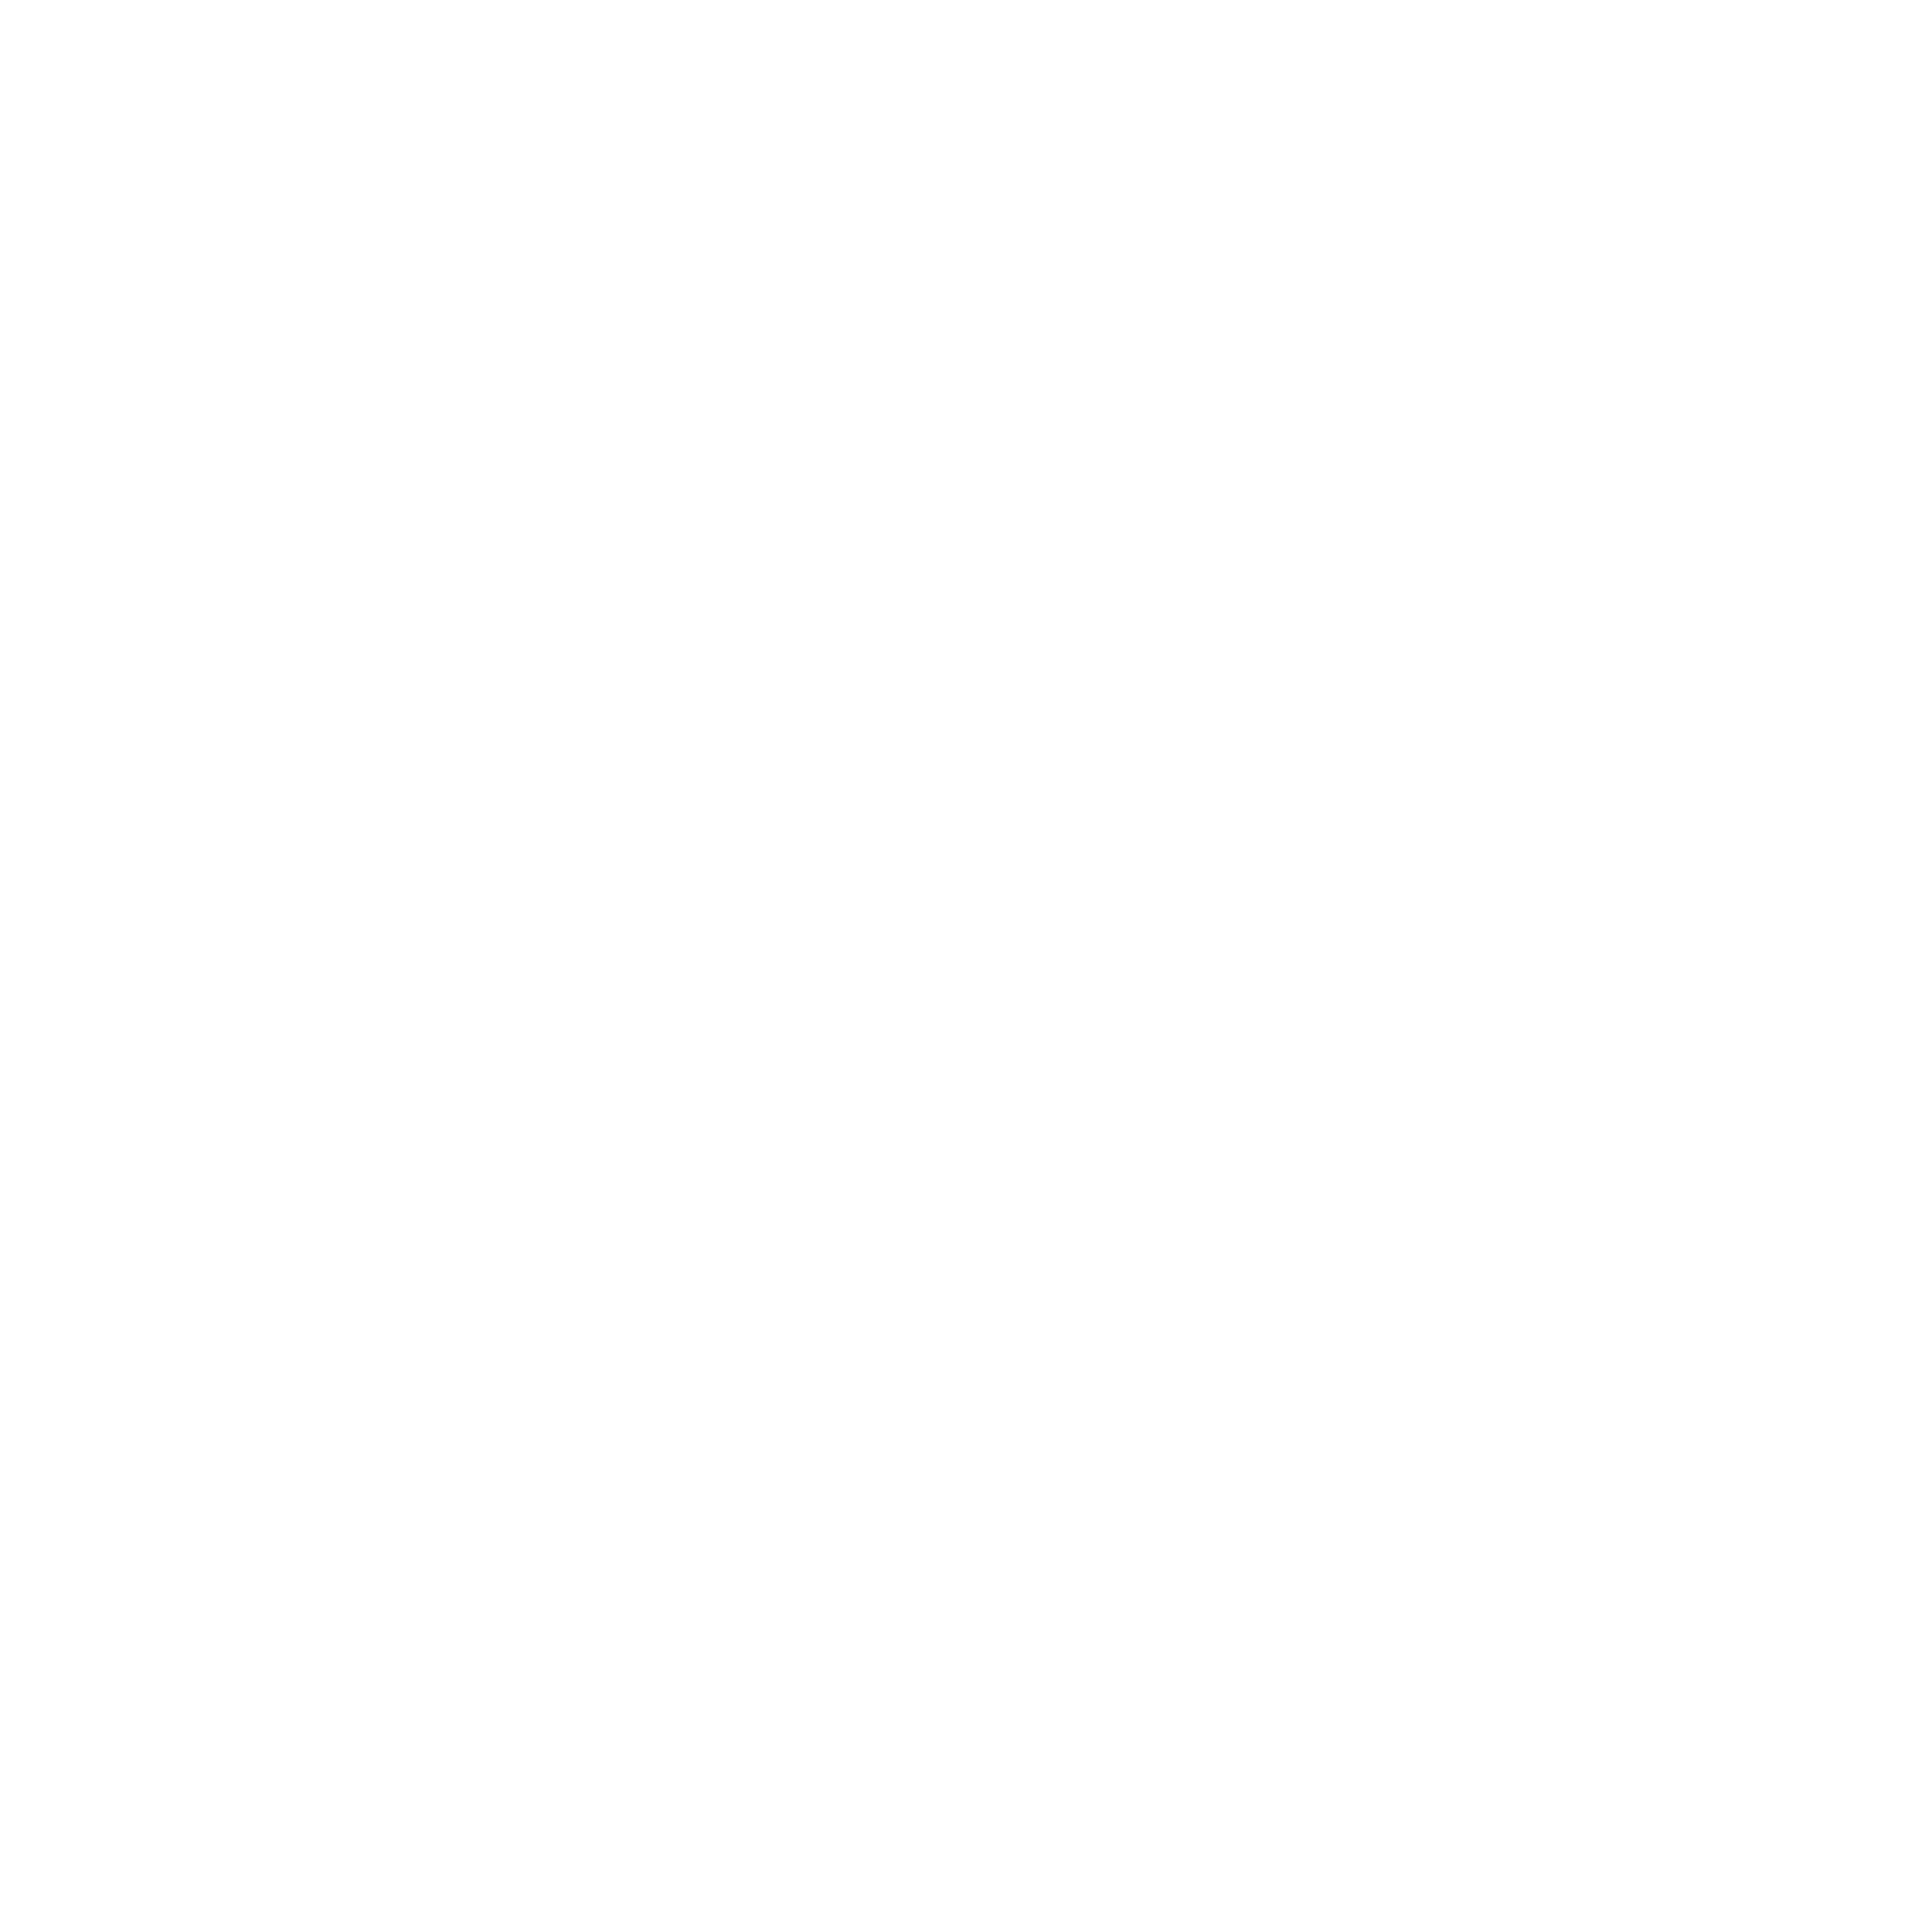 IFPTE